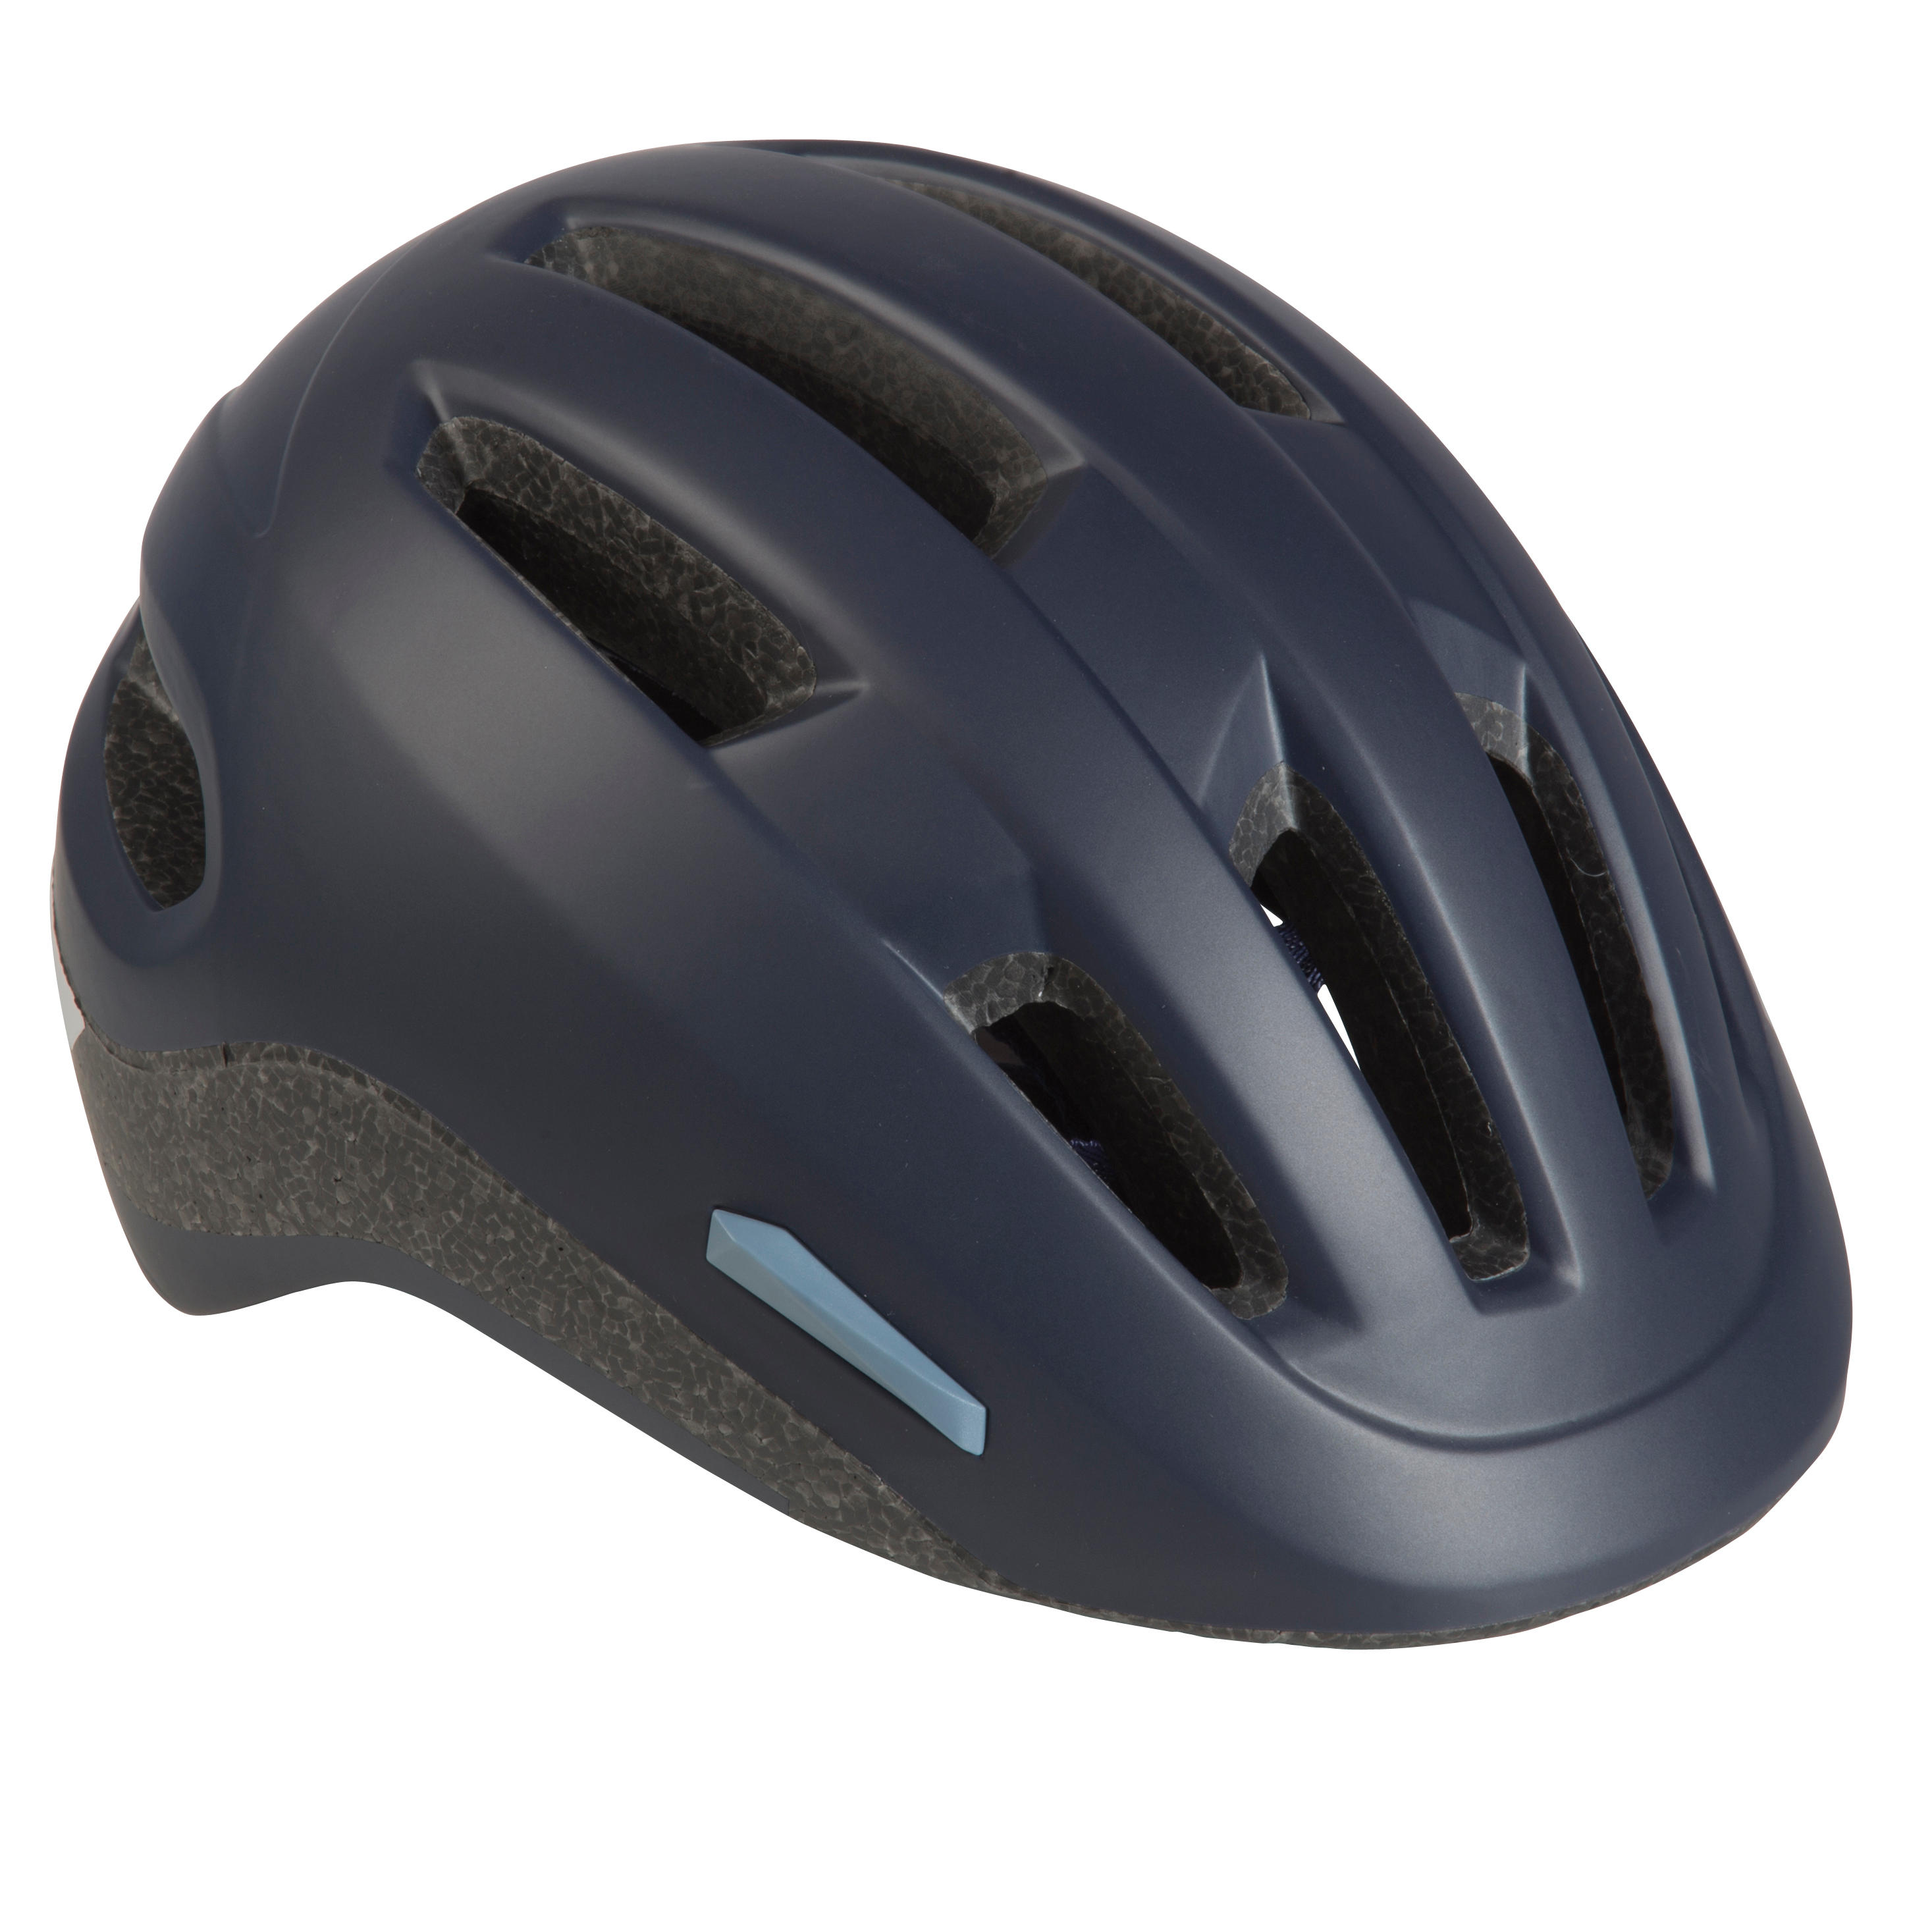 BTWIN 500 City Cycling Helmet - Blue